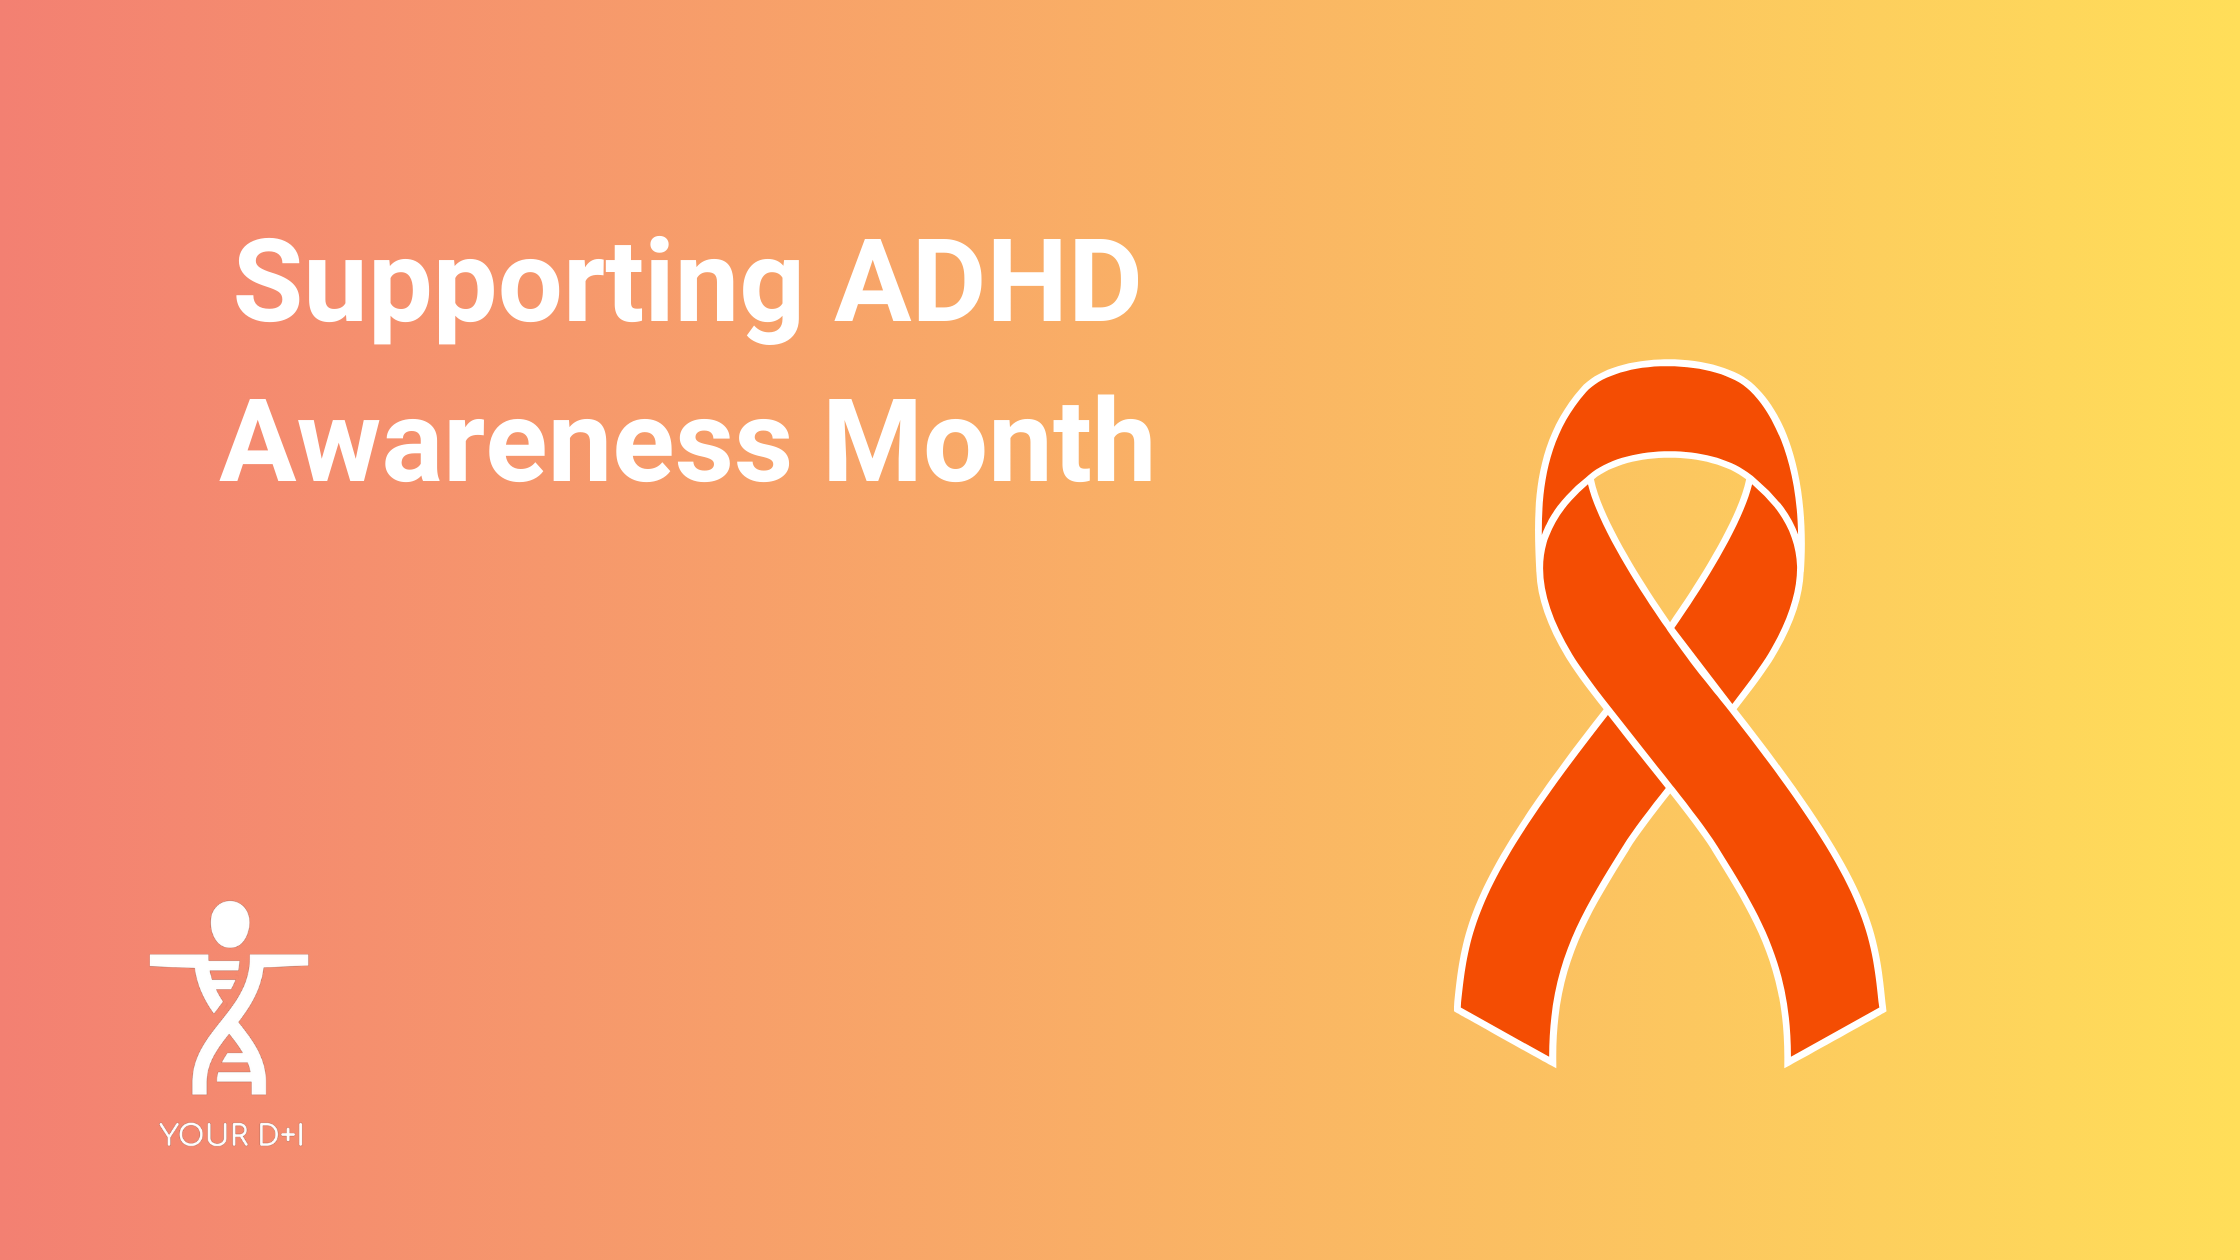 Supporting ADHD Awareness Month - ADHD Ribbon